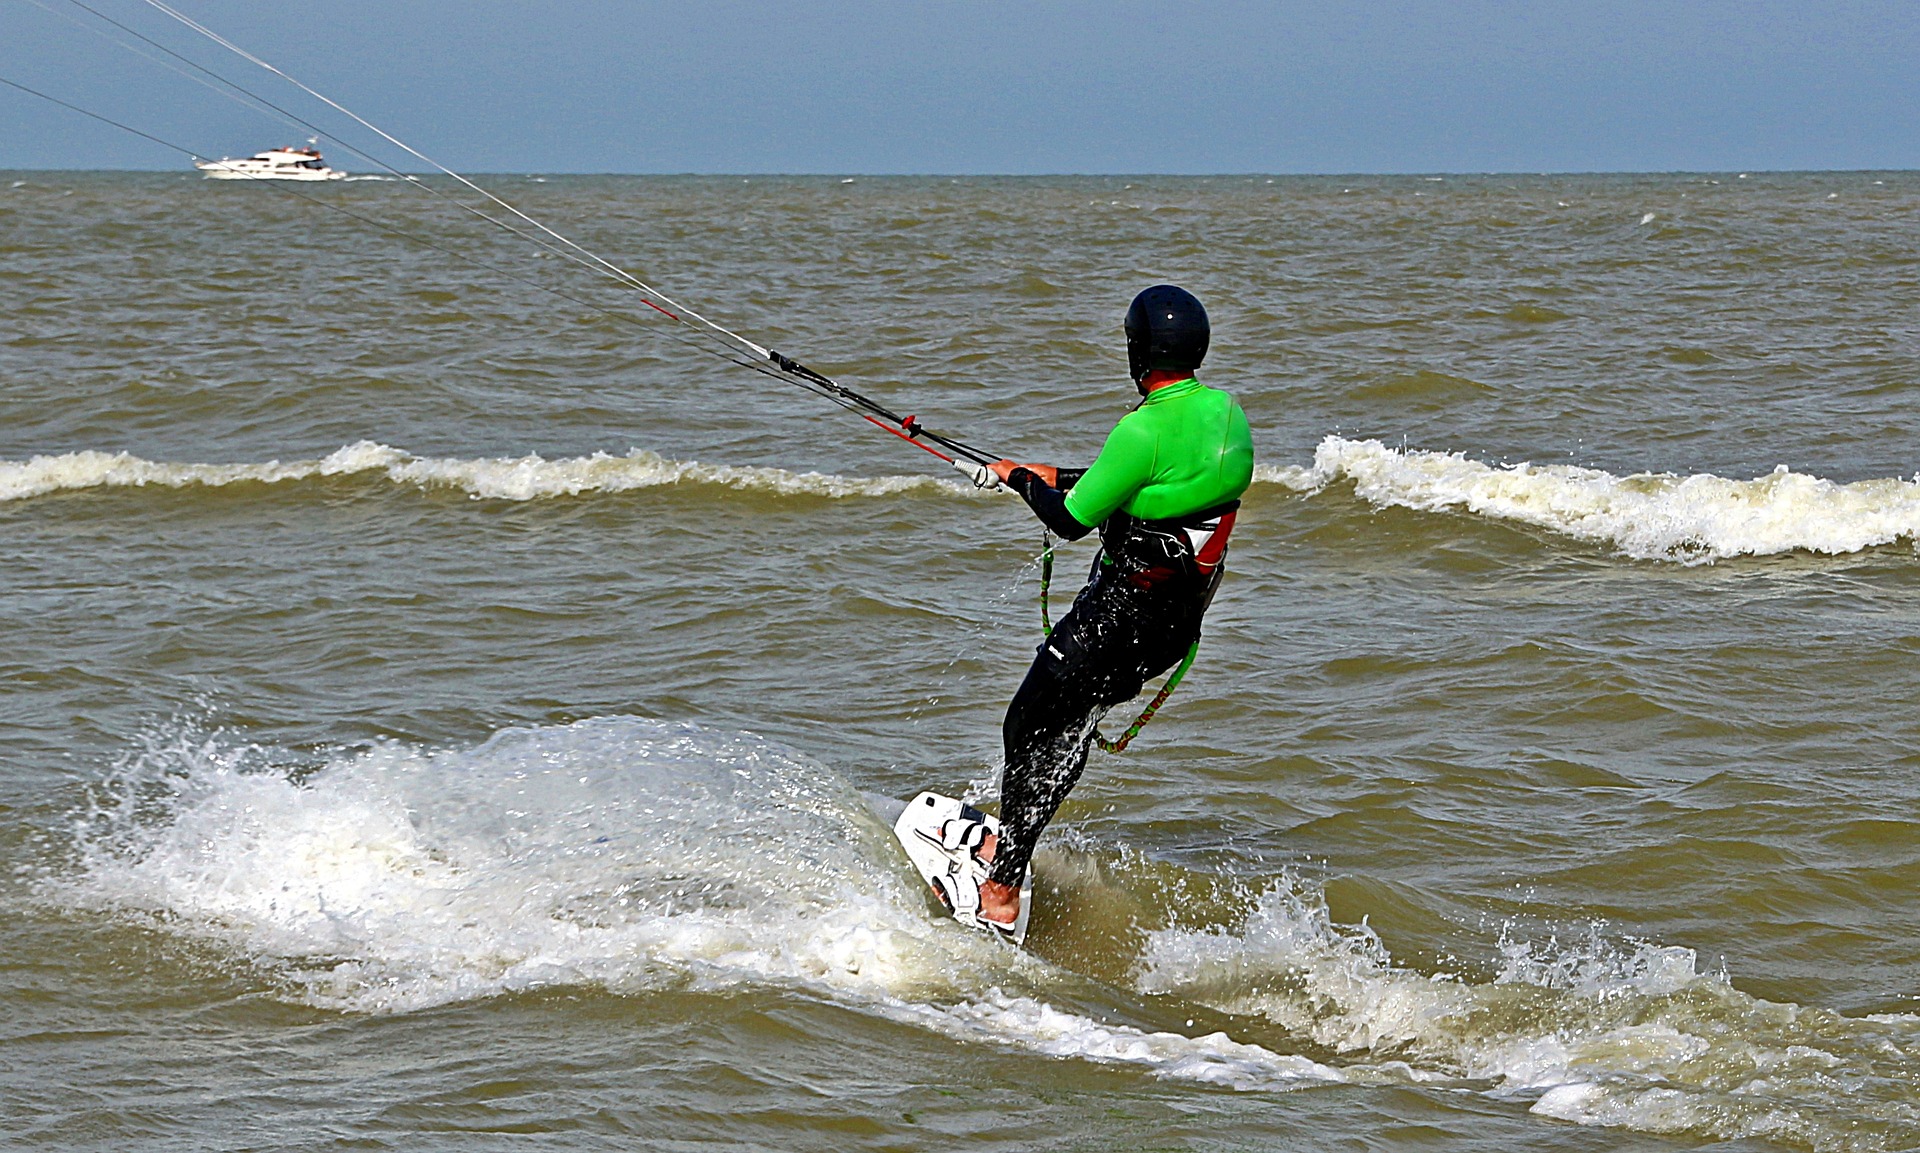 Kite Surfing, Activity, Human, Kite, Ocean, HQ Photo